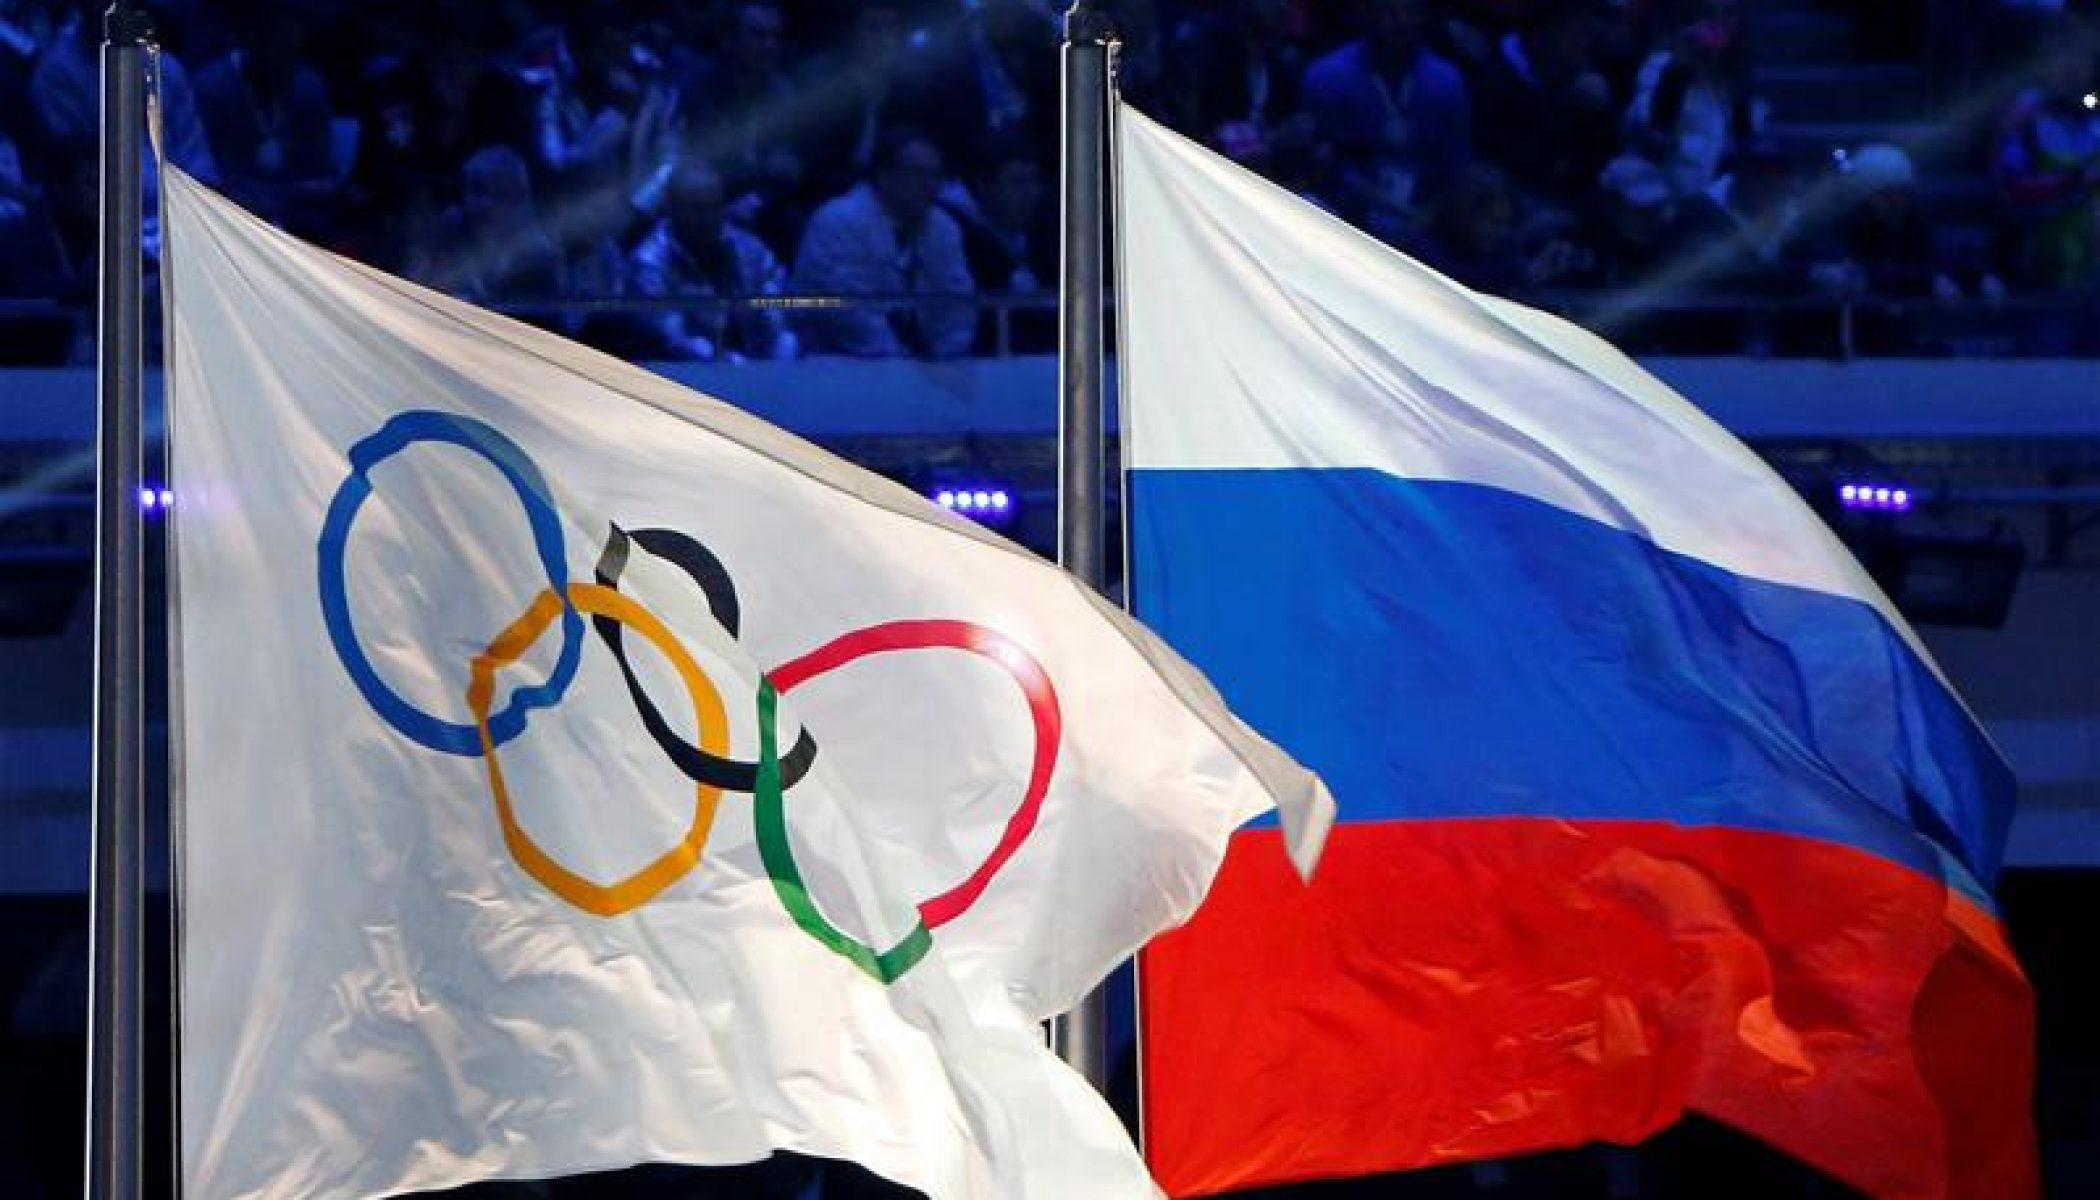 ALI JAWAD BLOG 3 – Do the WADA sanctions against Russia go far enough?